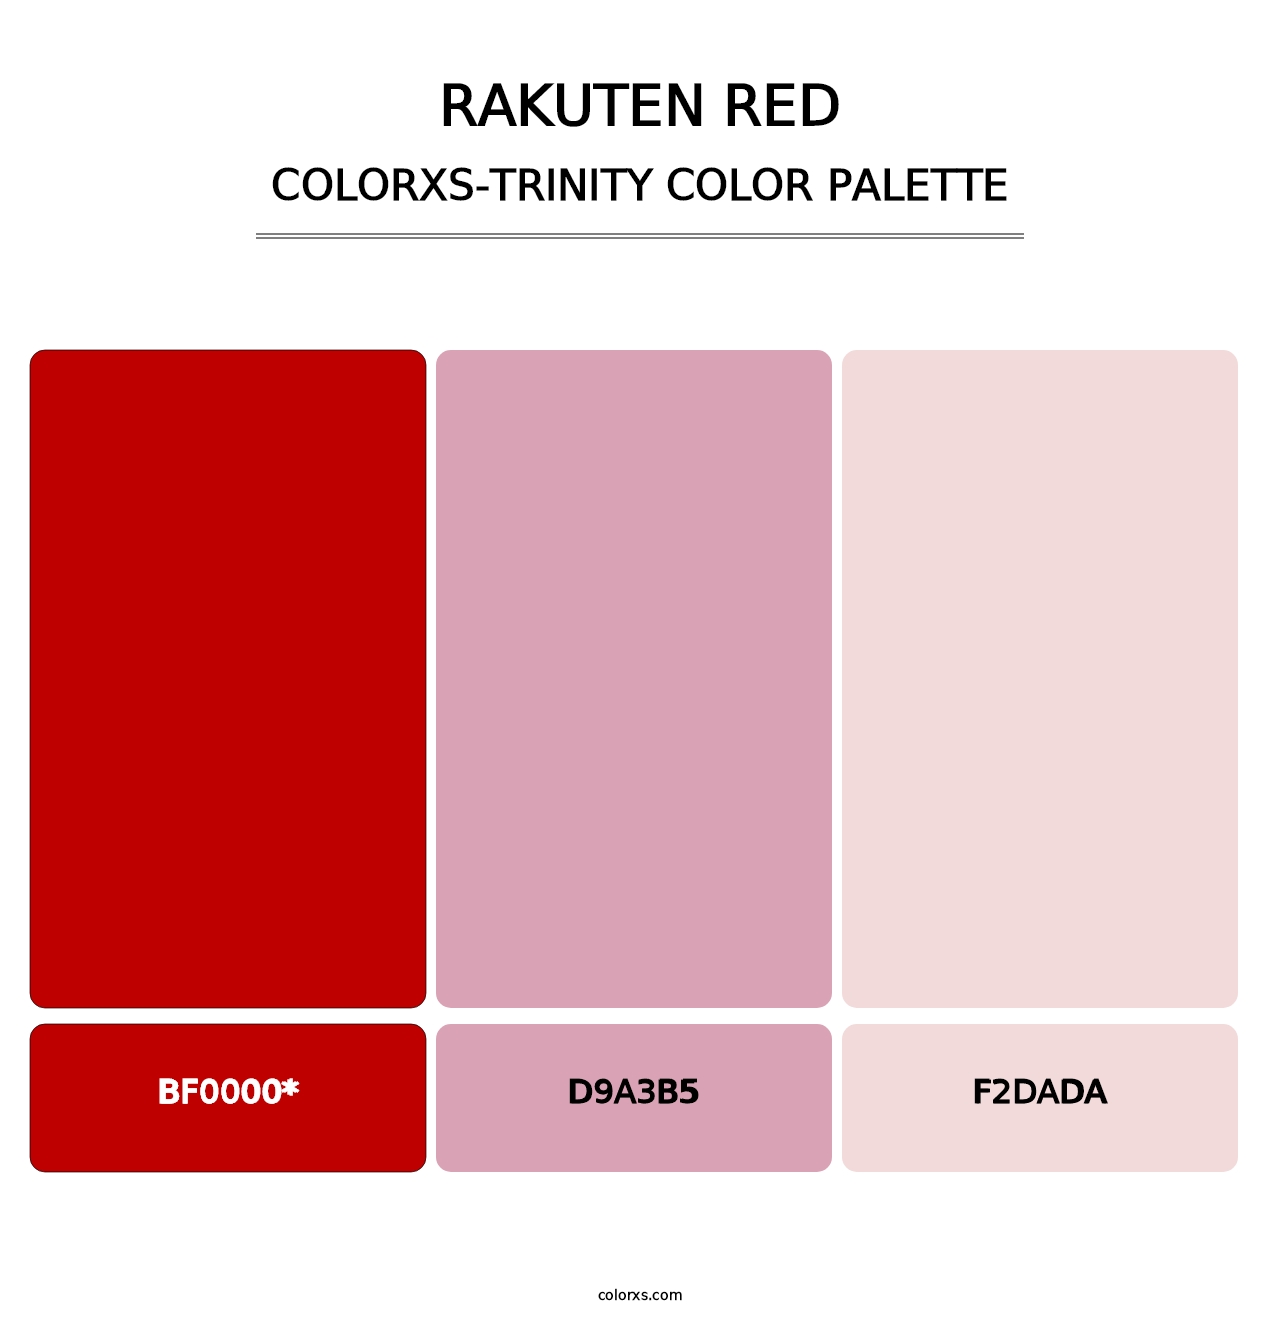 Rakuten Red - Colorxs Trinity Palette